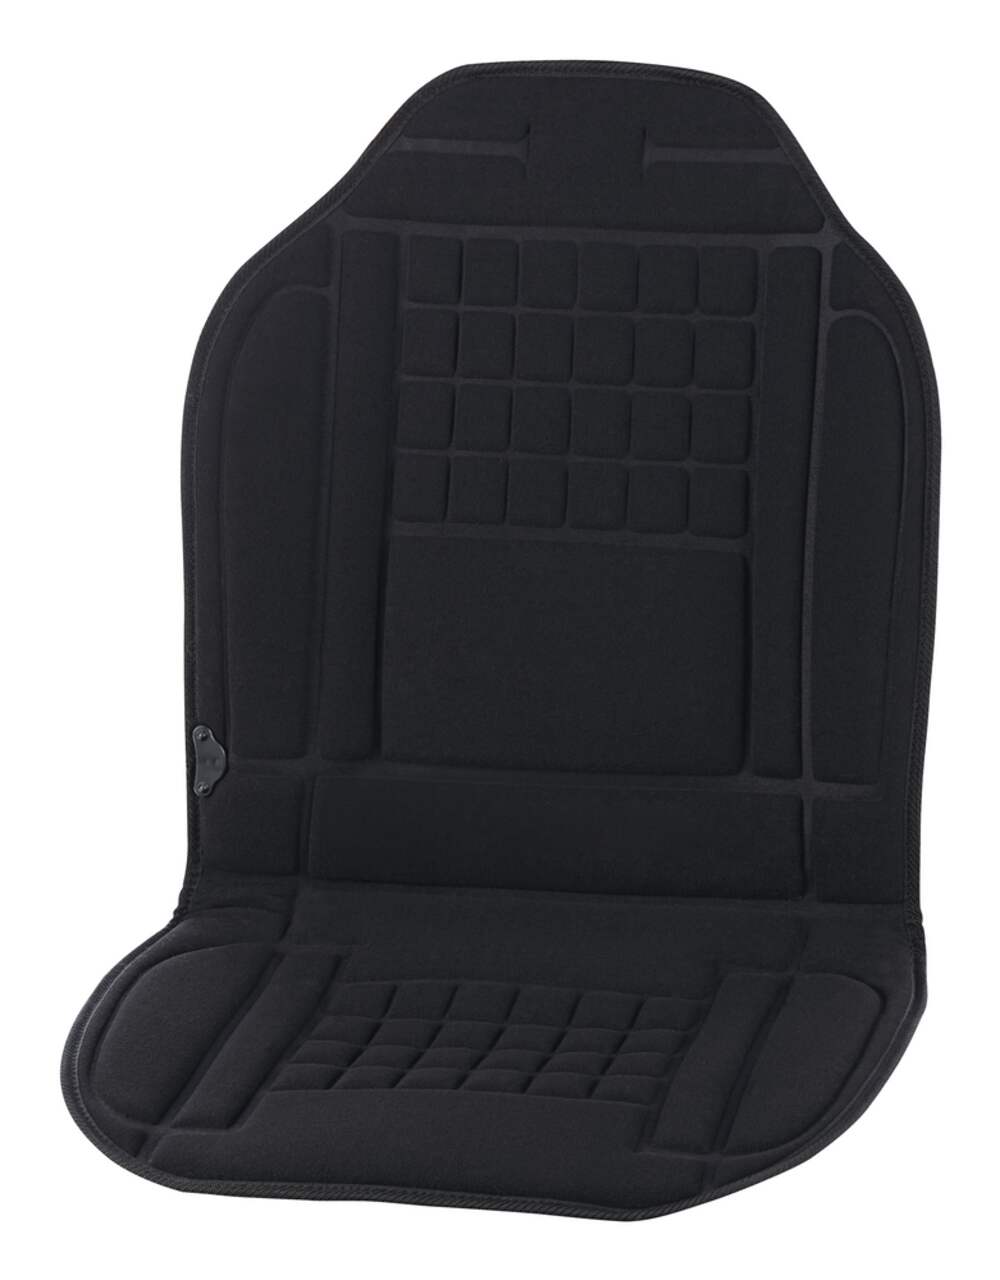 Smart Gear 12-Volt Heated Auto Seat Cushion